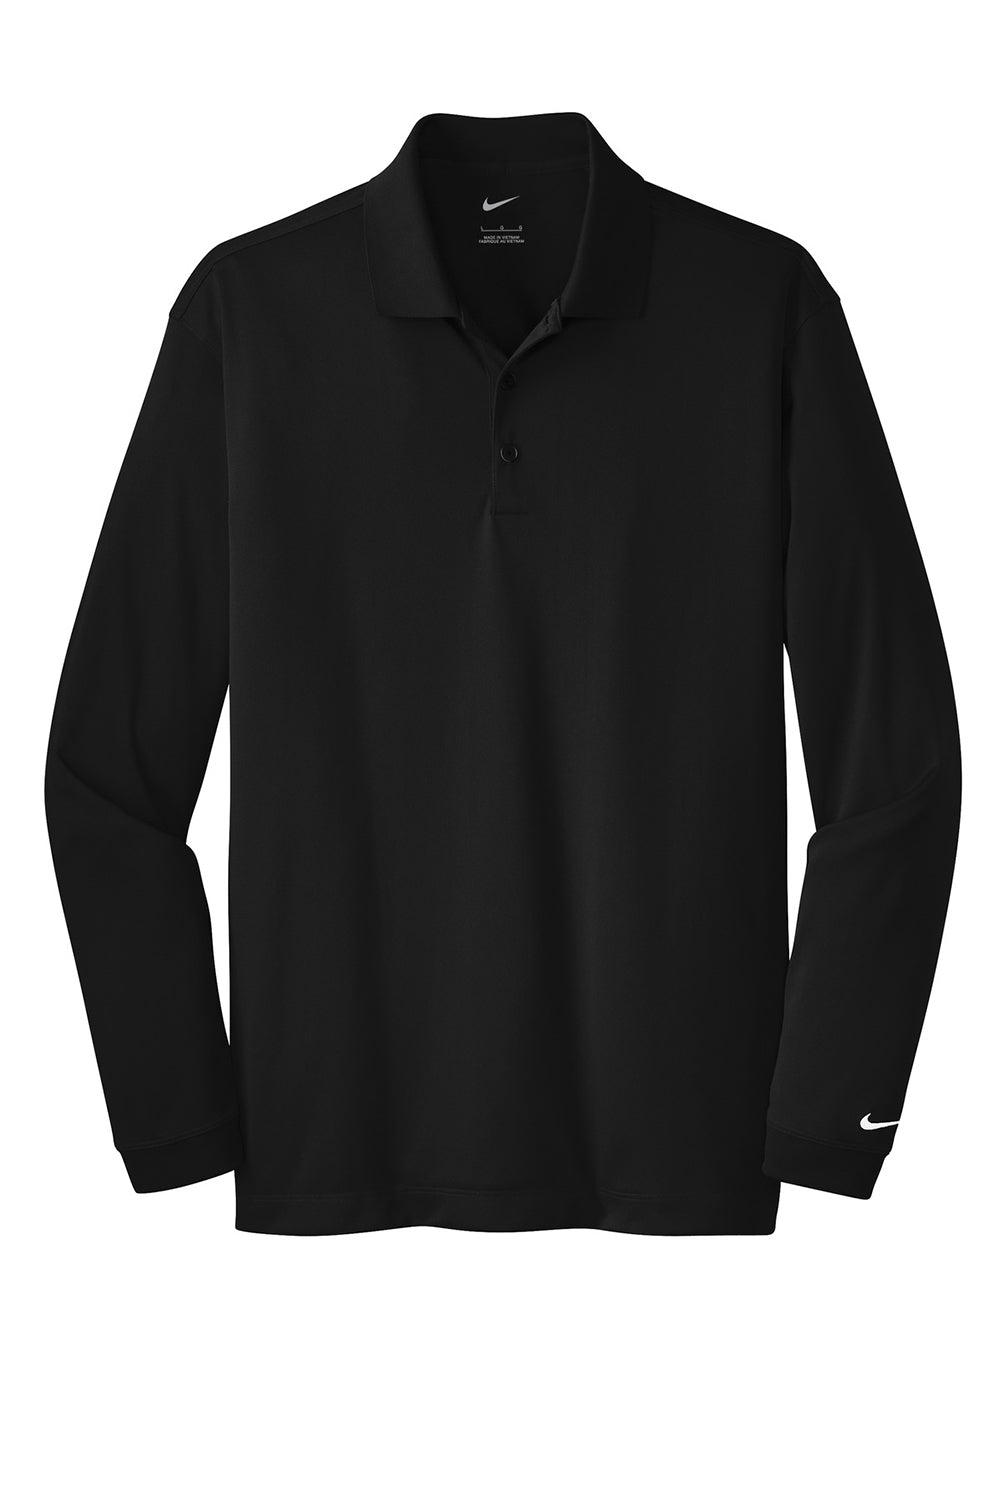 Nike 466364/604940 Mens Stretch Tech Dri-Fit Moisture Wicking Long Sleeve Polo Shirt Black Flat Front